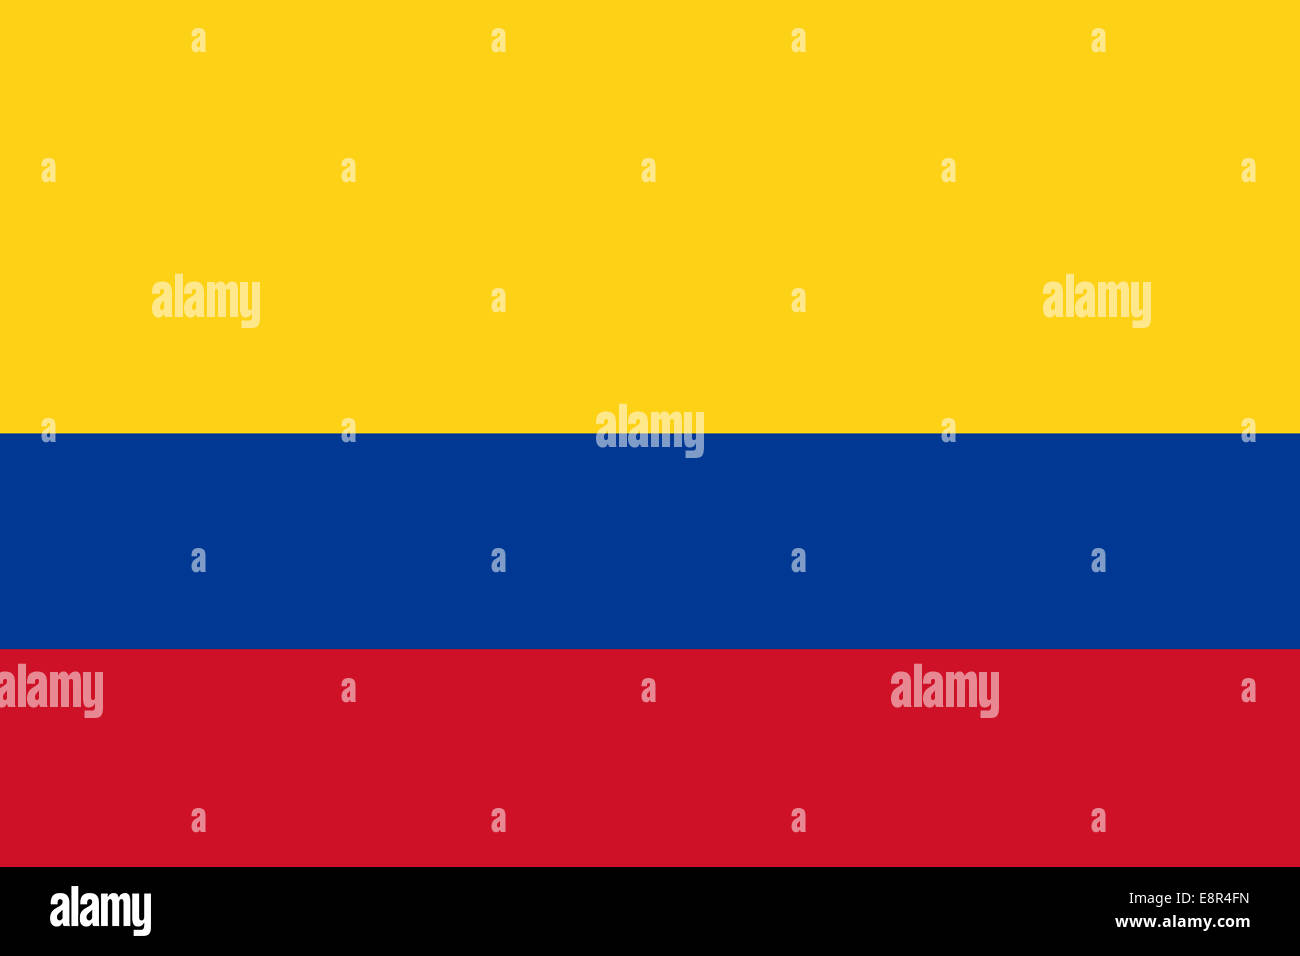 Flagge Kolumbiens - Standardverhältnis der kolumbianischen Flagge - True RGB-Farbmodus Stockfoto